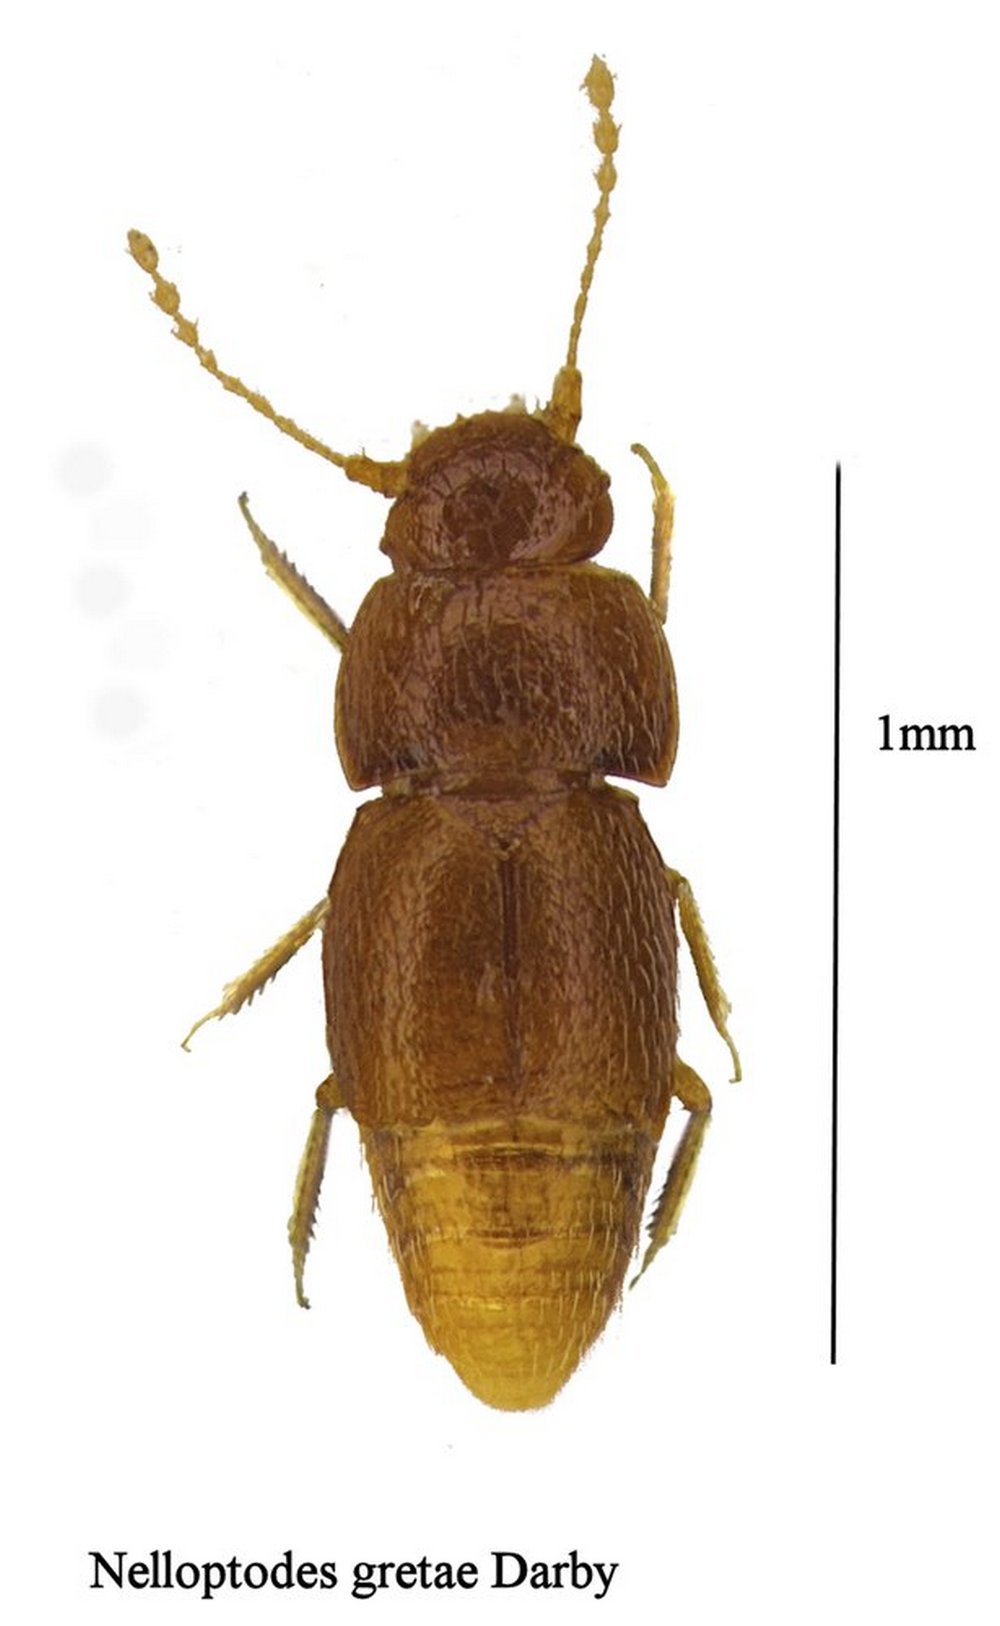 the new species of beetle Nelloptodes gretae, named after Swedish environmental campaigner Greta Thunberg. Image credit: AP